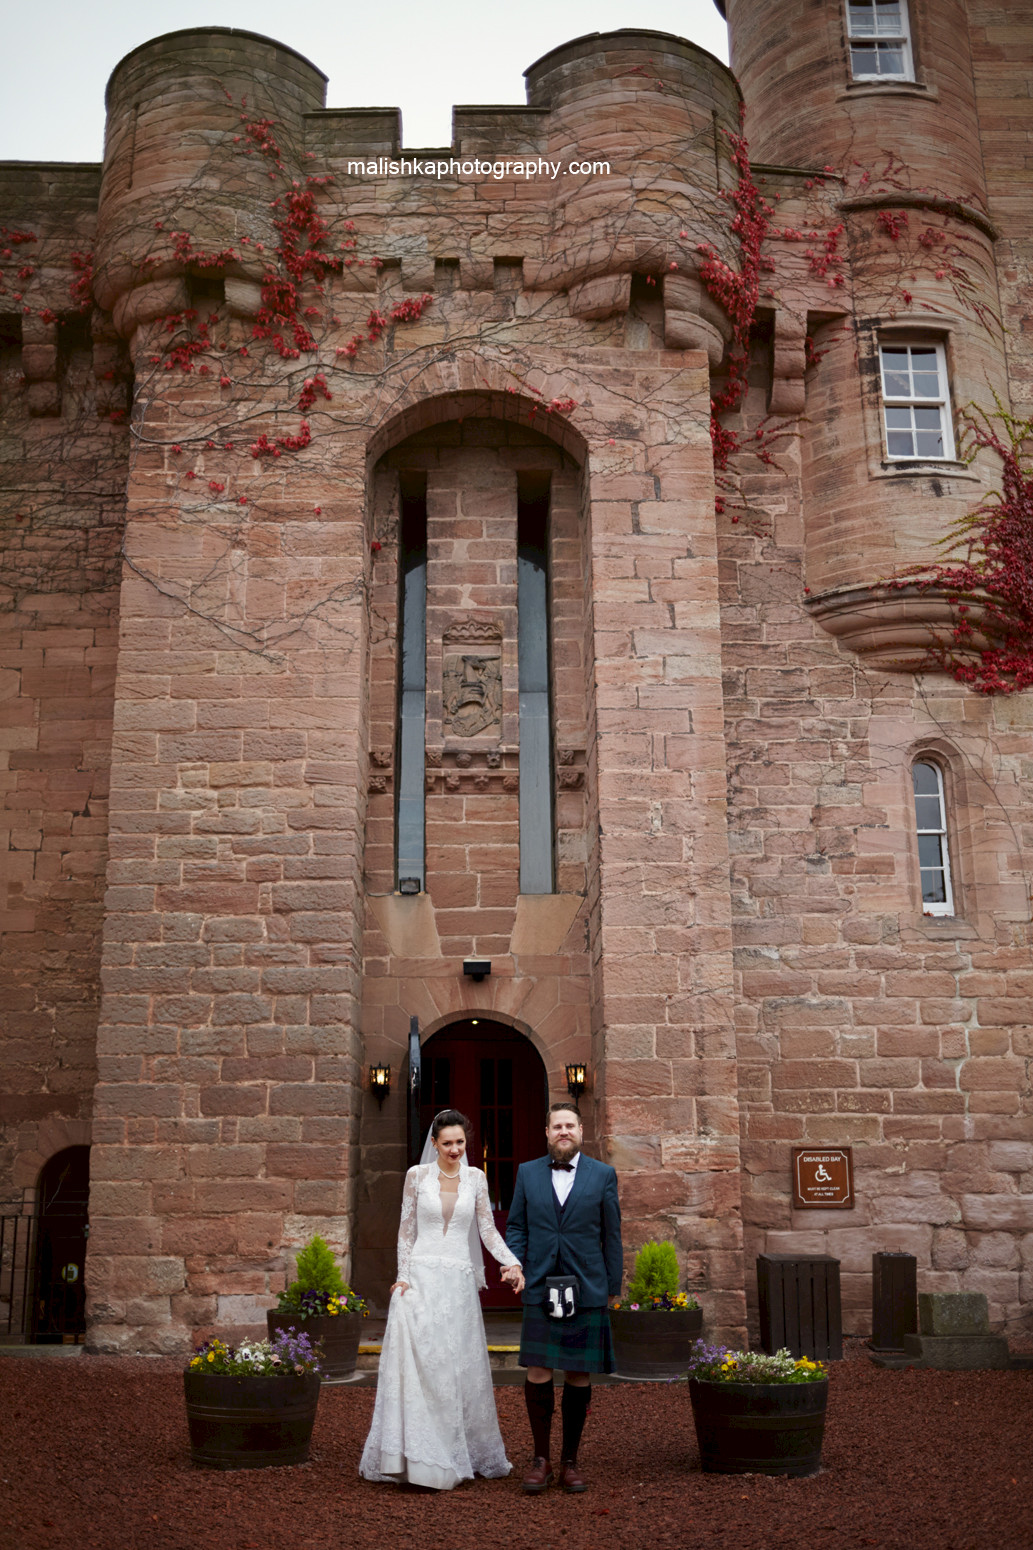 Entrance to the  Dalhousie Castle